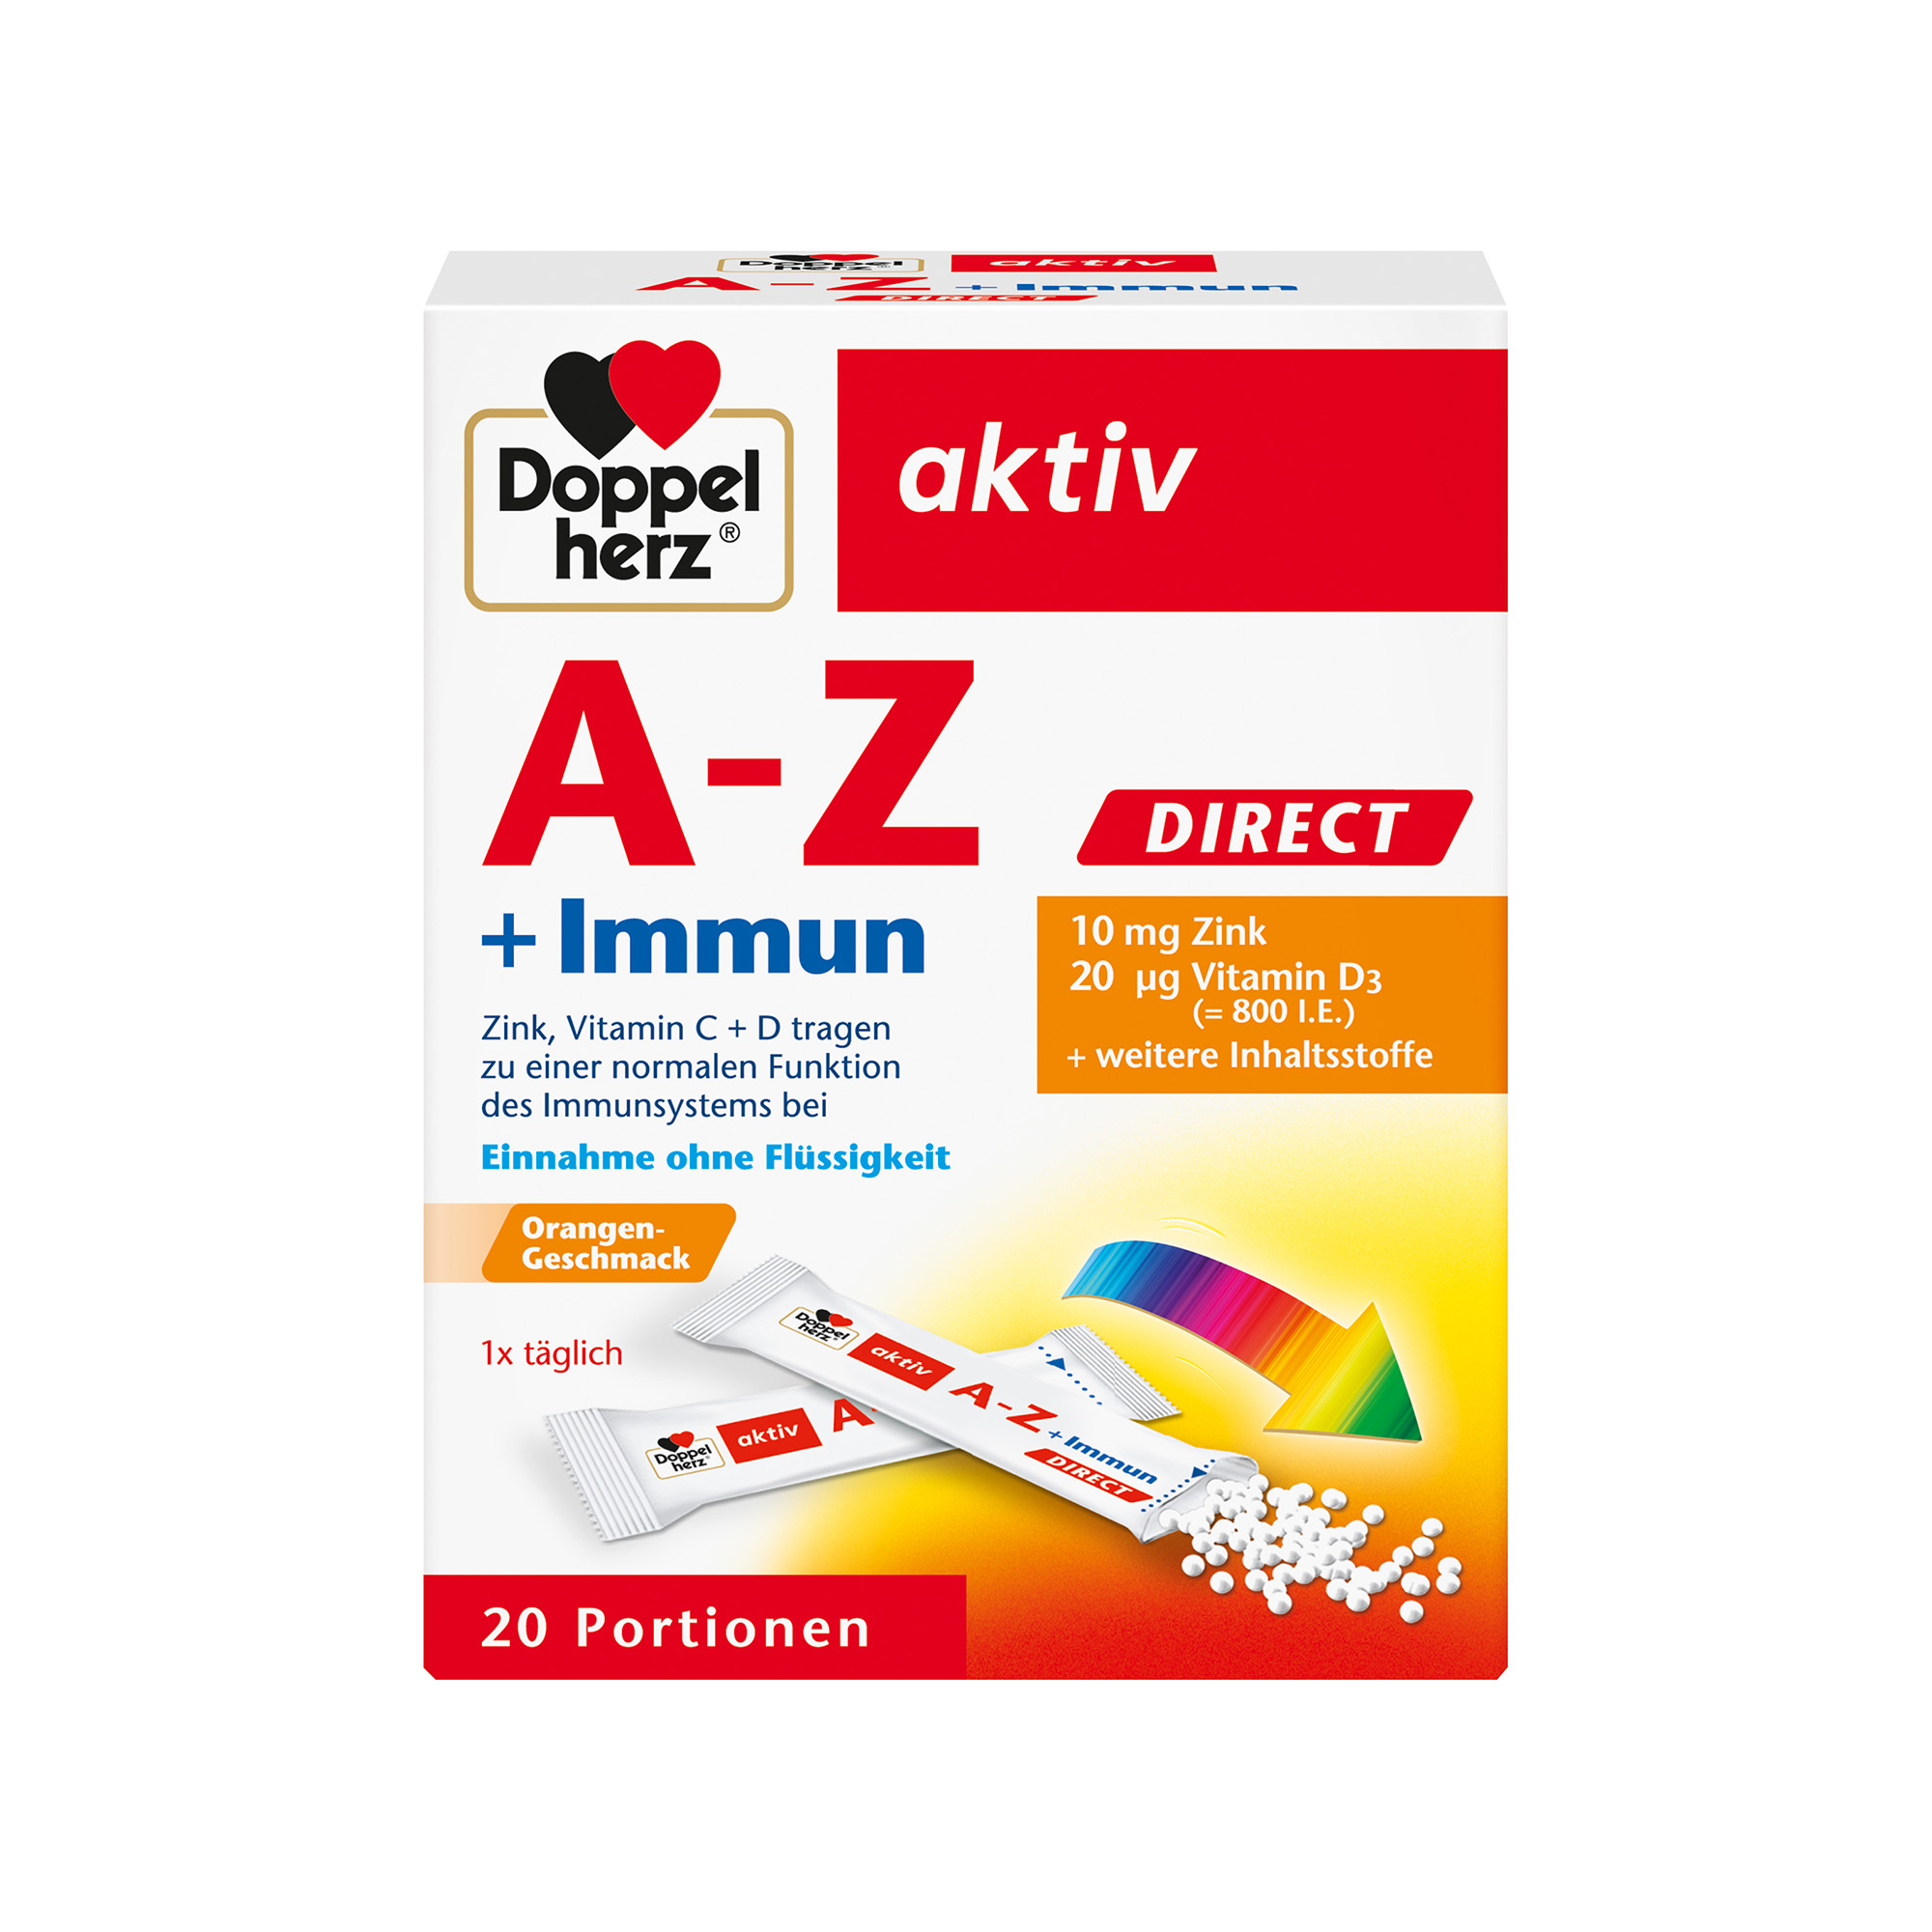 Doppelherz aktiv A-Z + Immune direct, 20 Portions